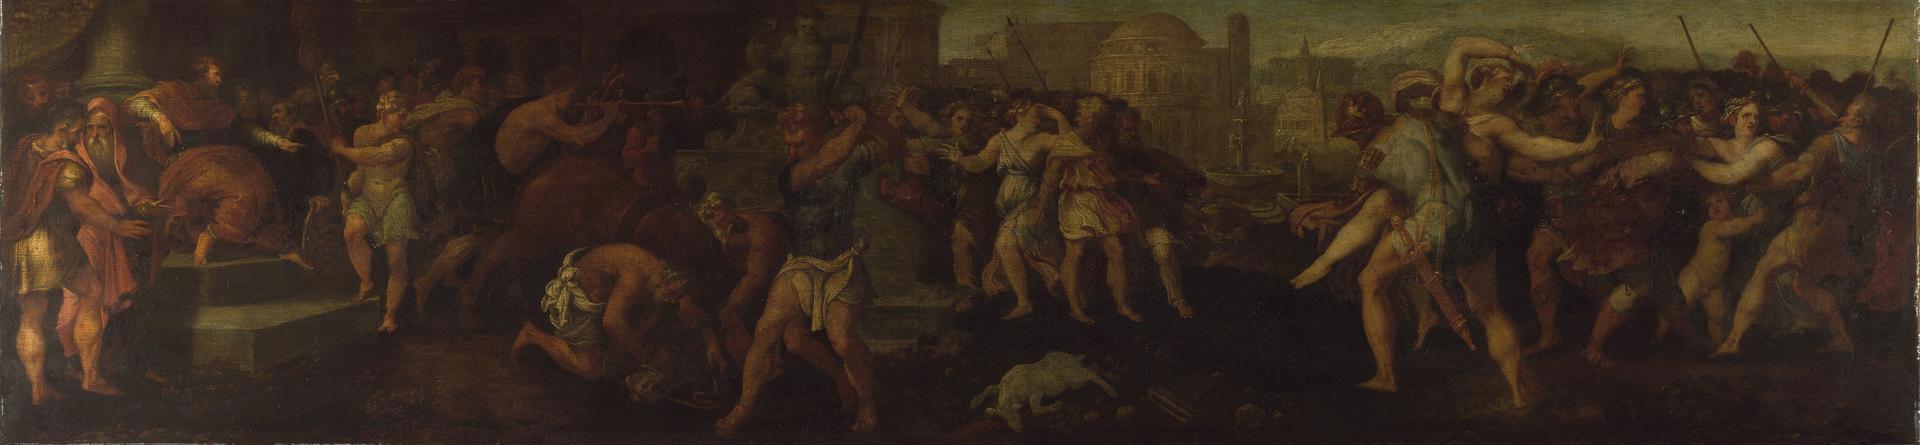 The Rape of the Sabines by Giulio Licinio